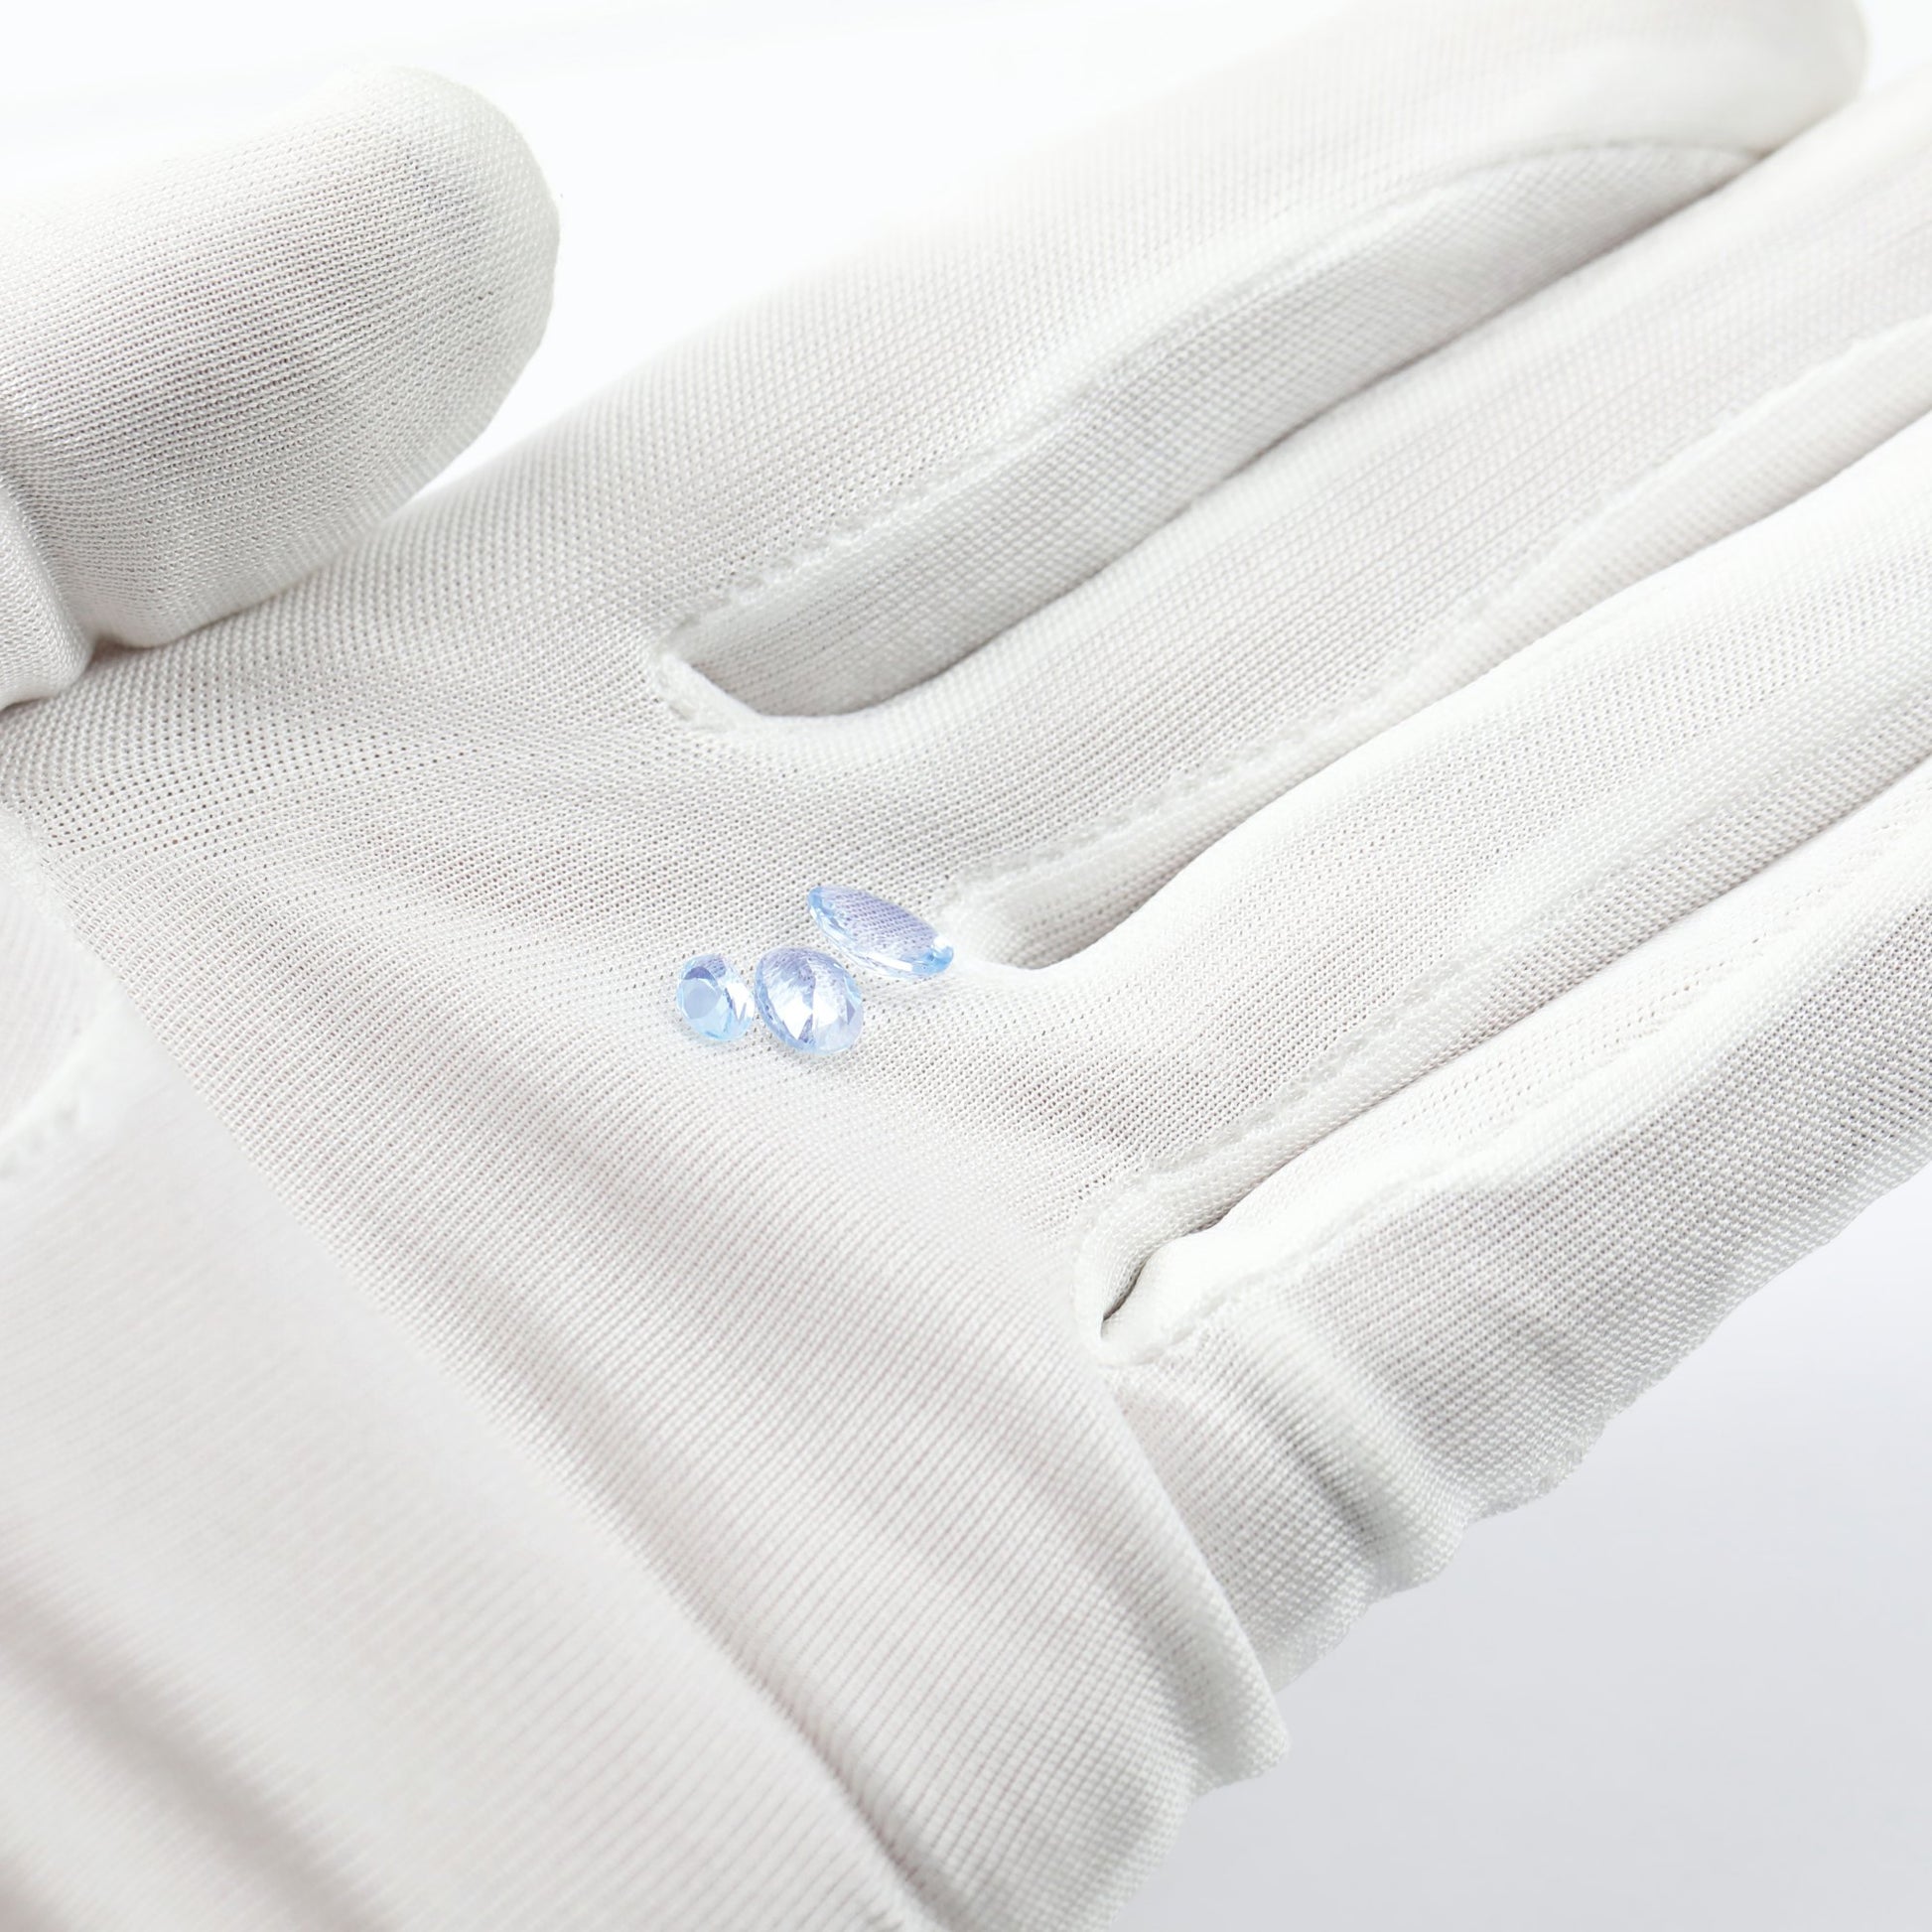 A hand holding 3 light blue oval aquamarine gems.